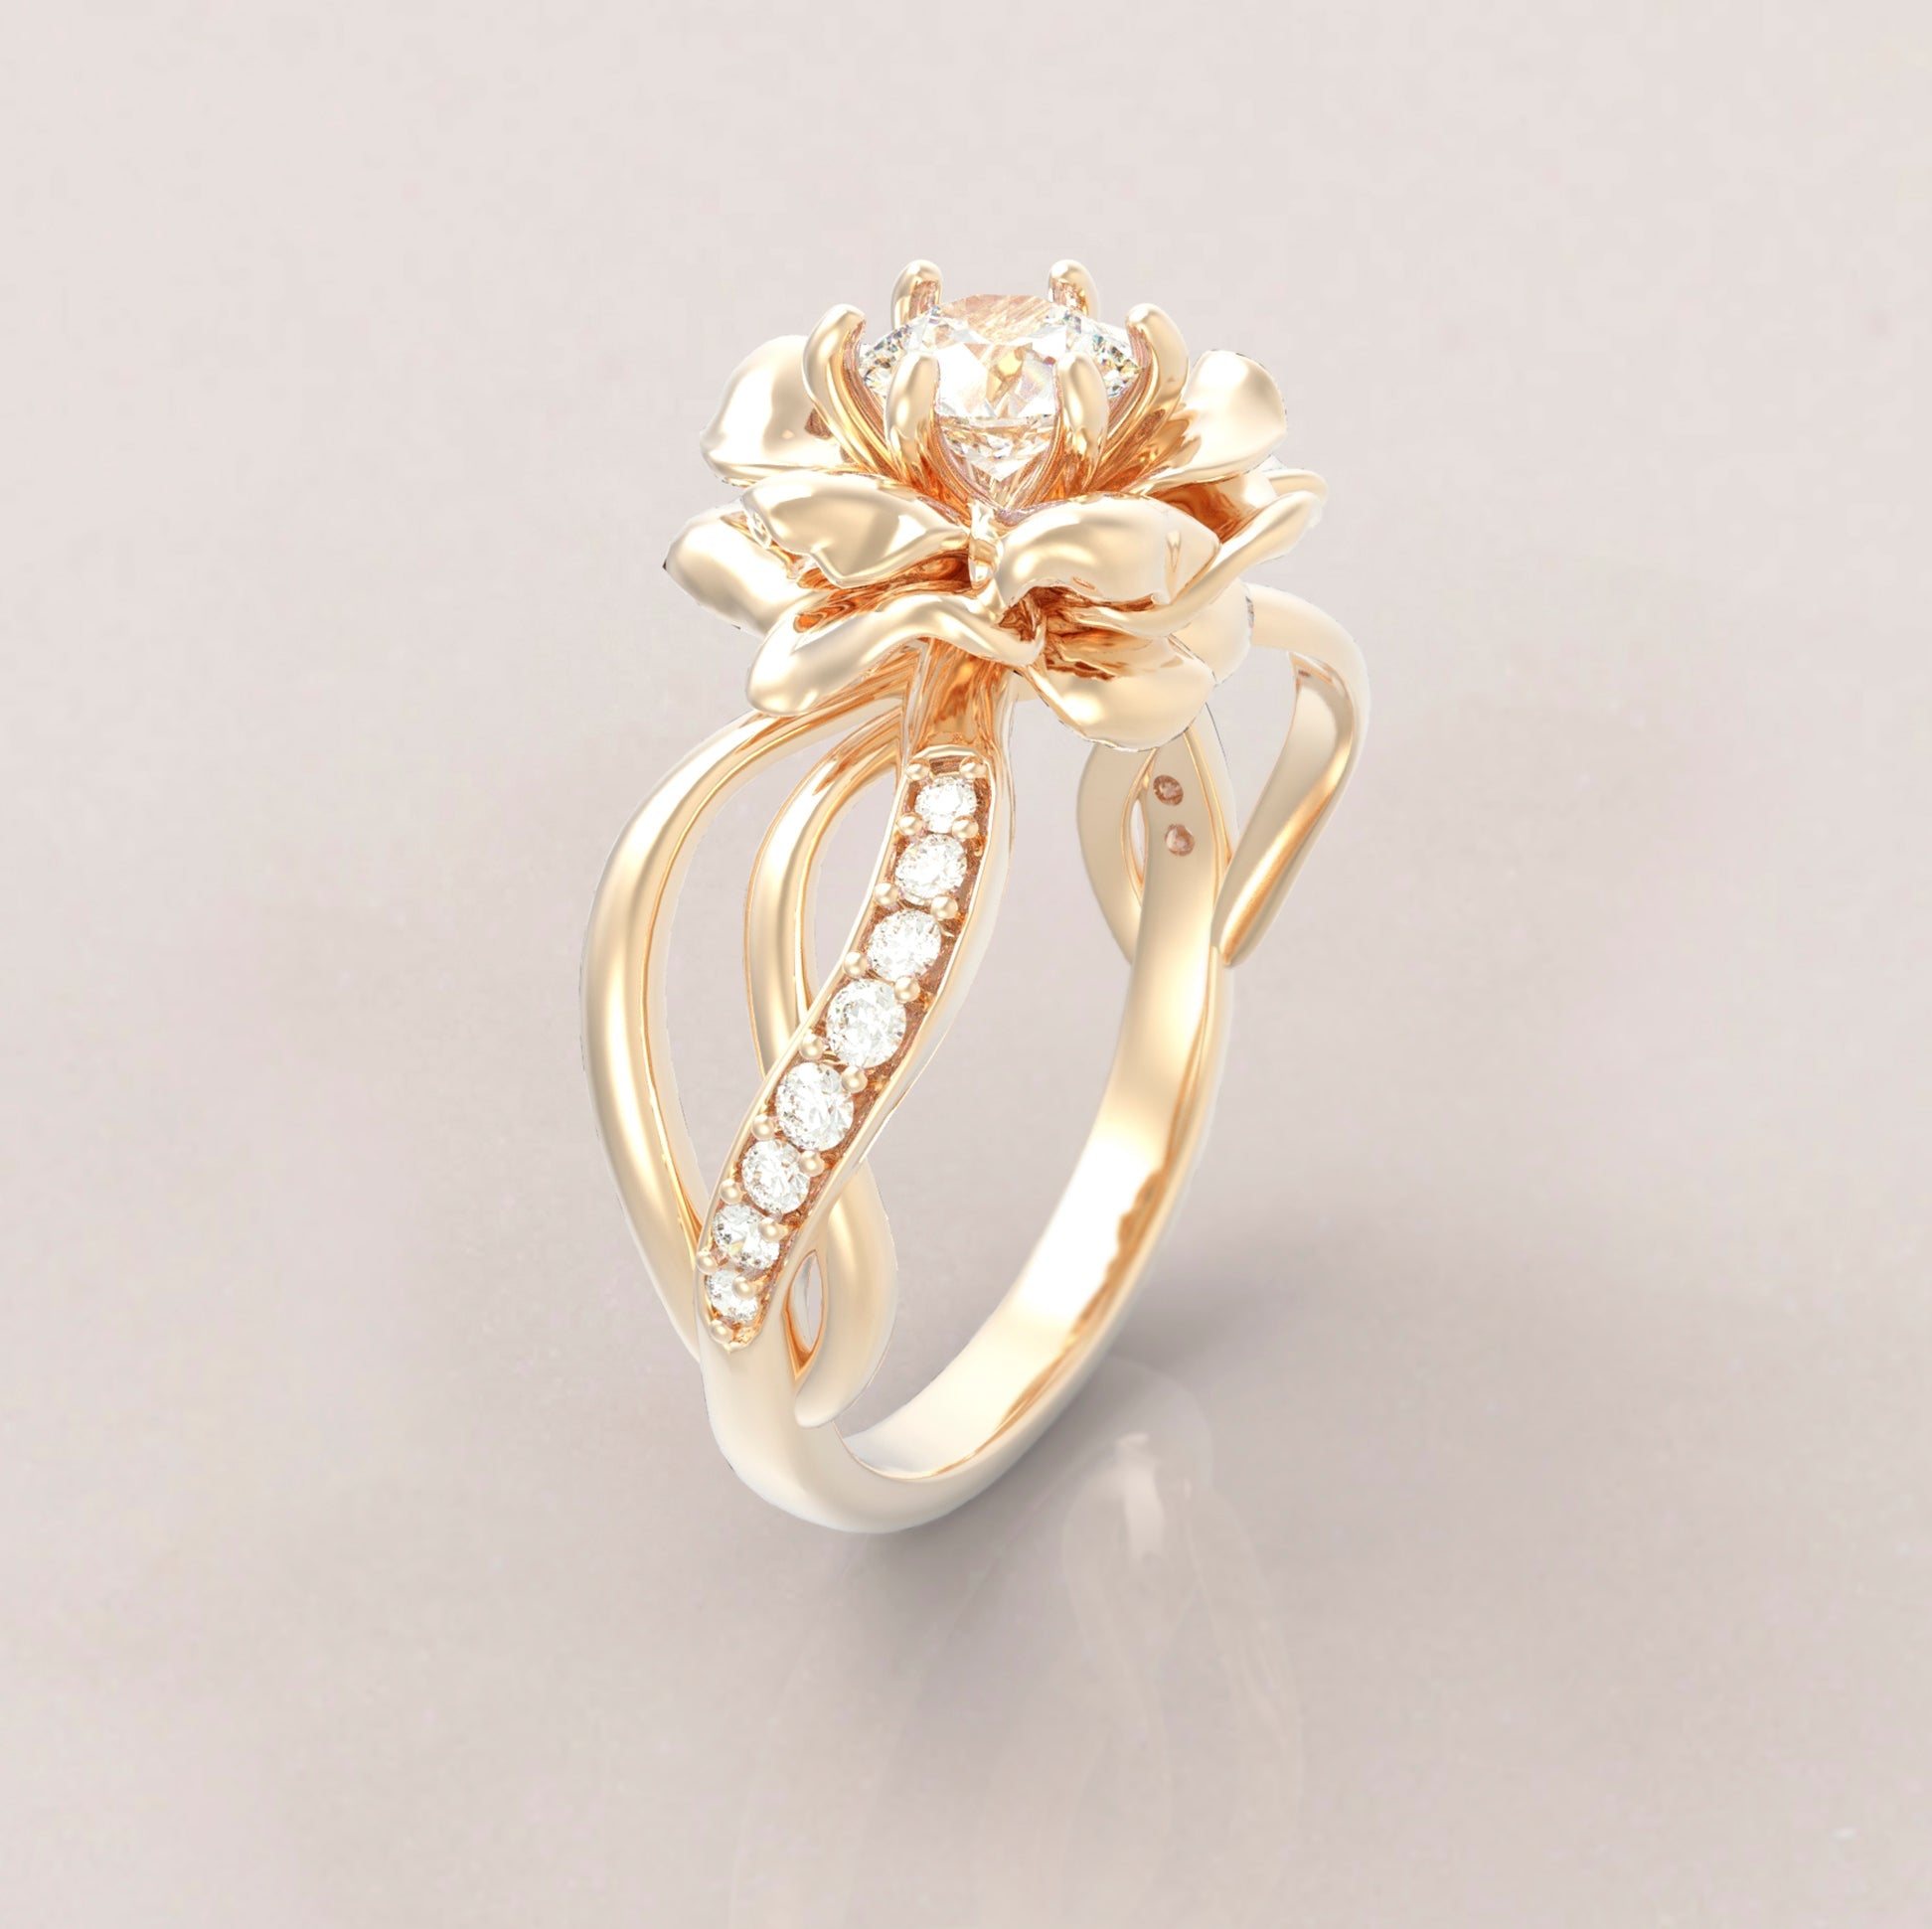 Shop Exclusive Gold Diamond Rings Design for Men | PC Chandra